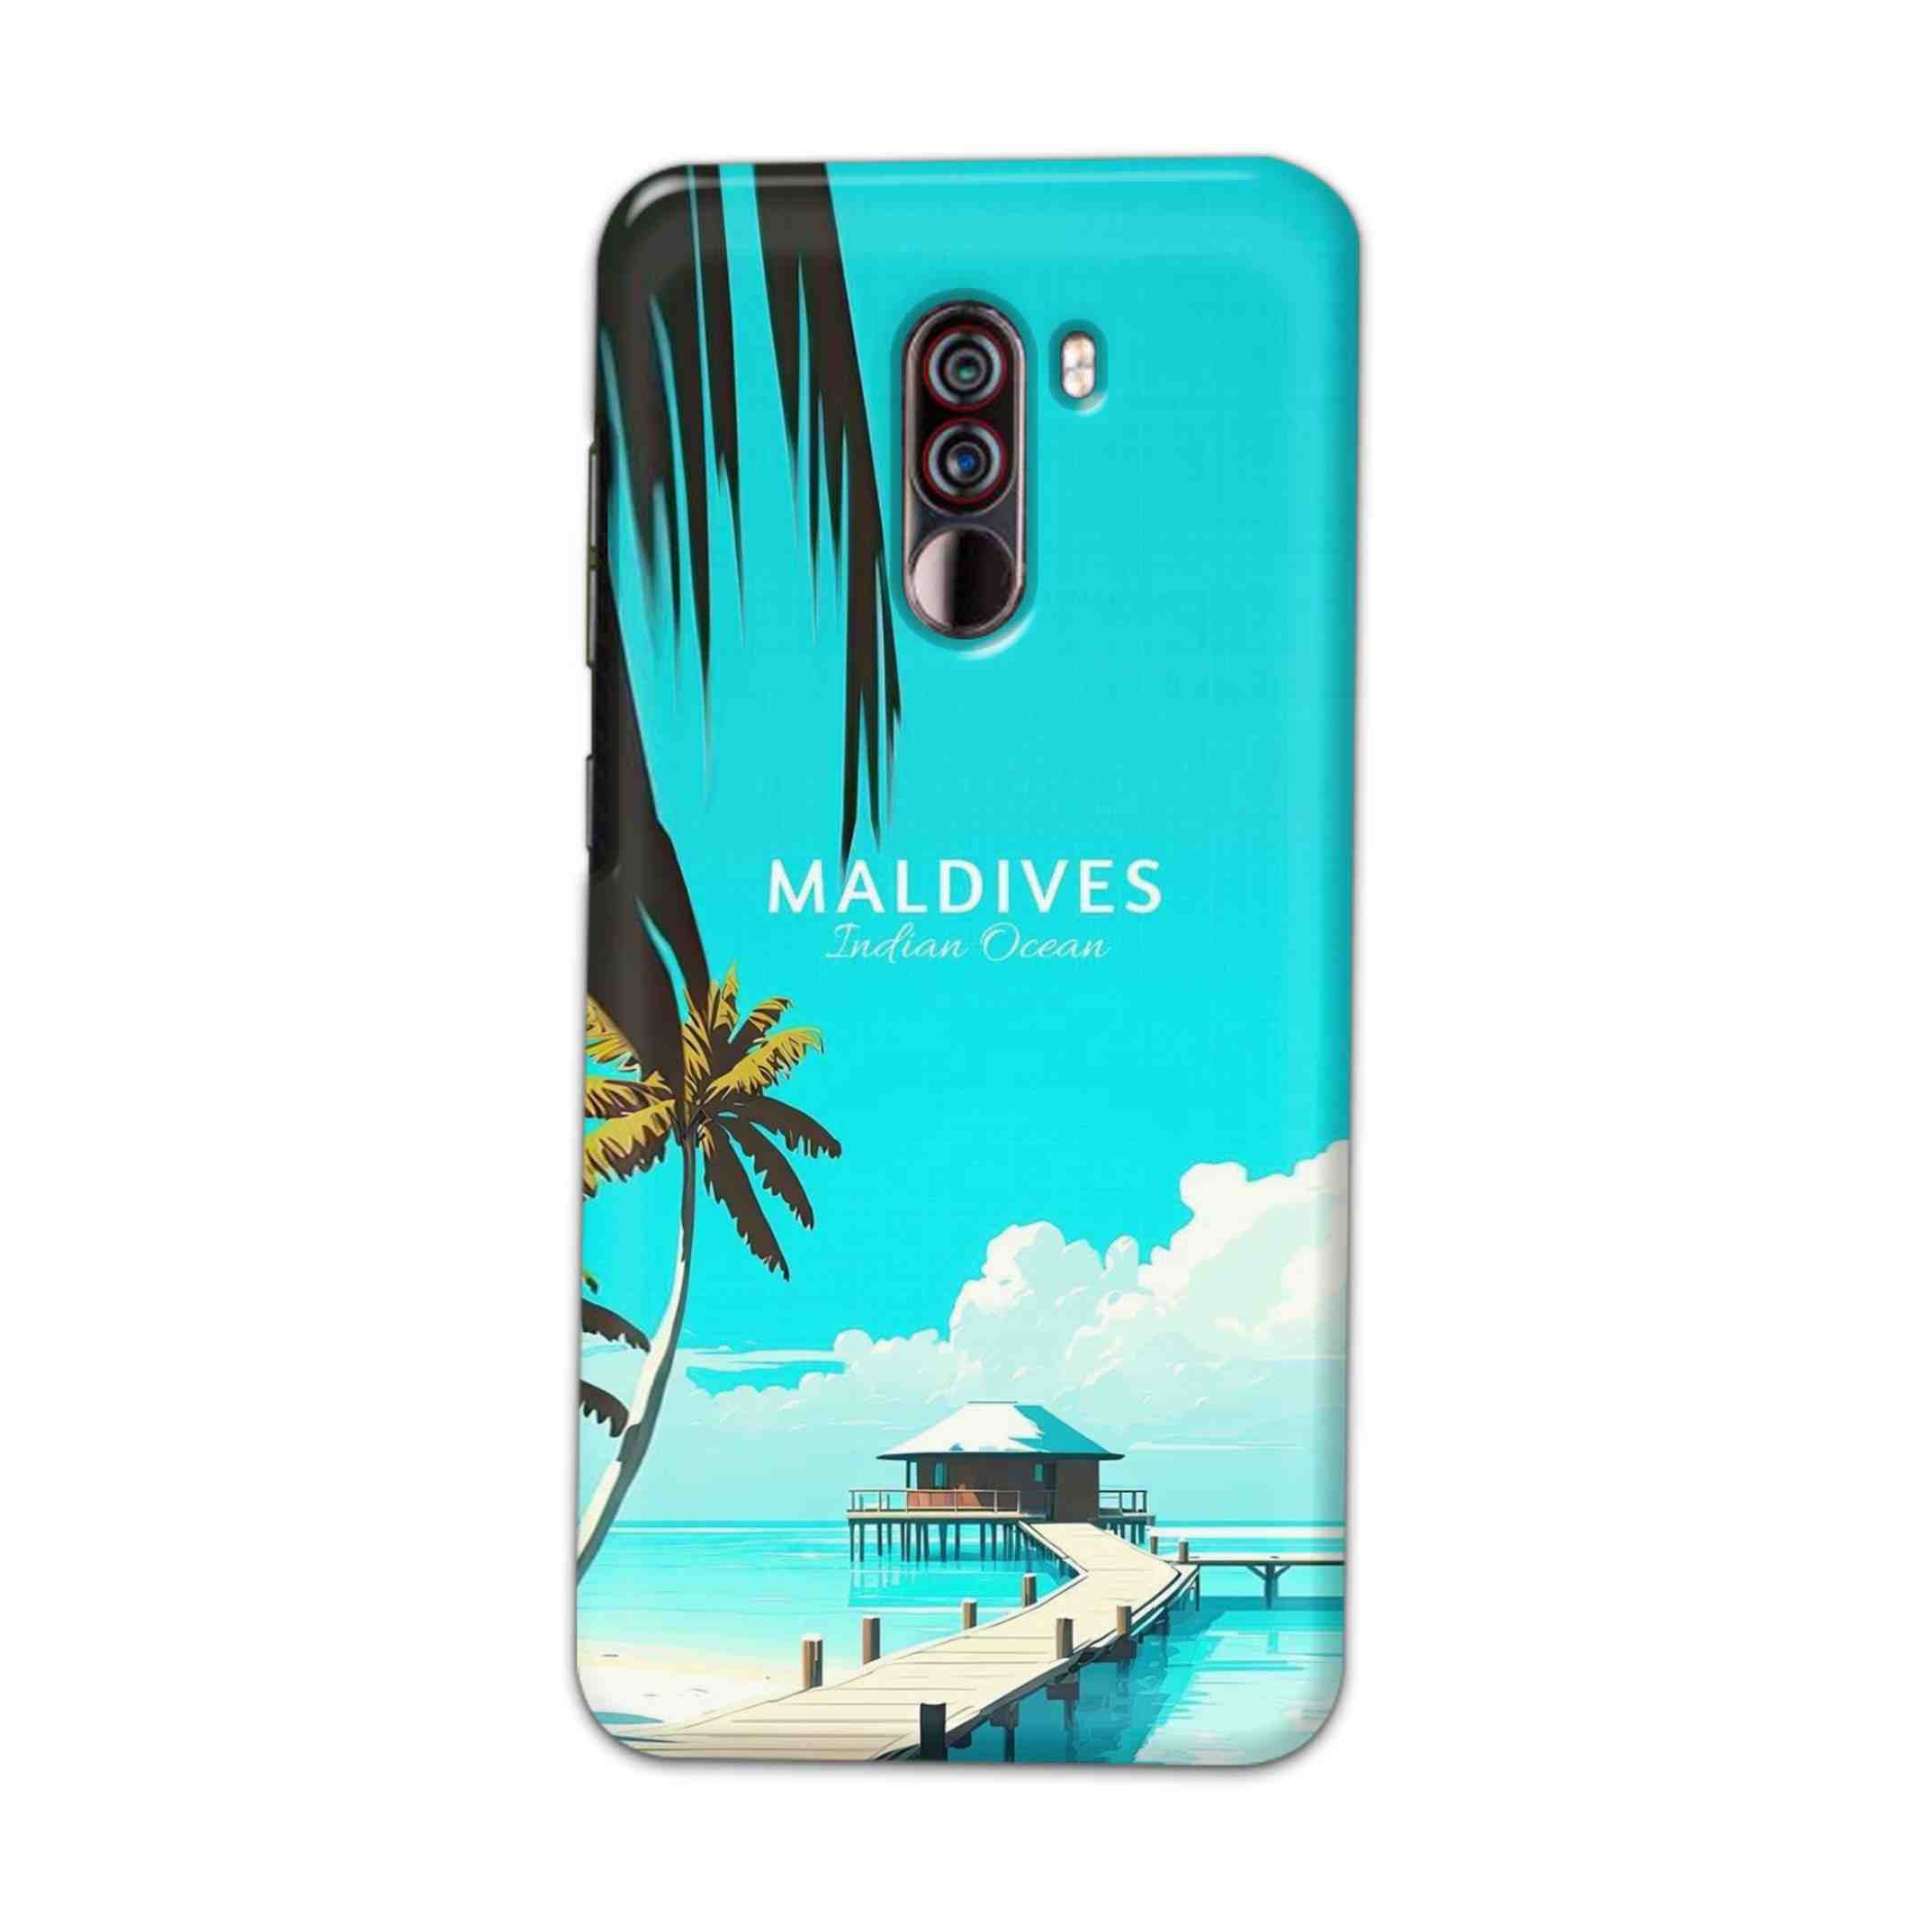 Buy Maldives Hard Back Mobile Phone Case Cover For Xiaomi Pocophone F1 Online